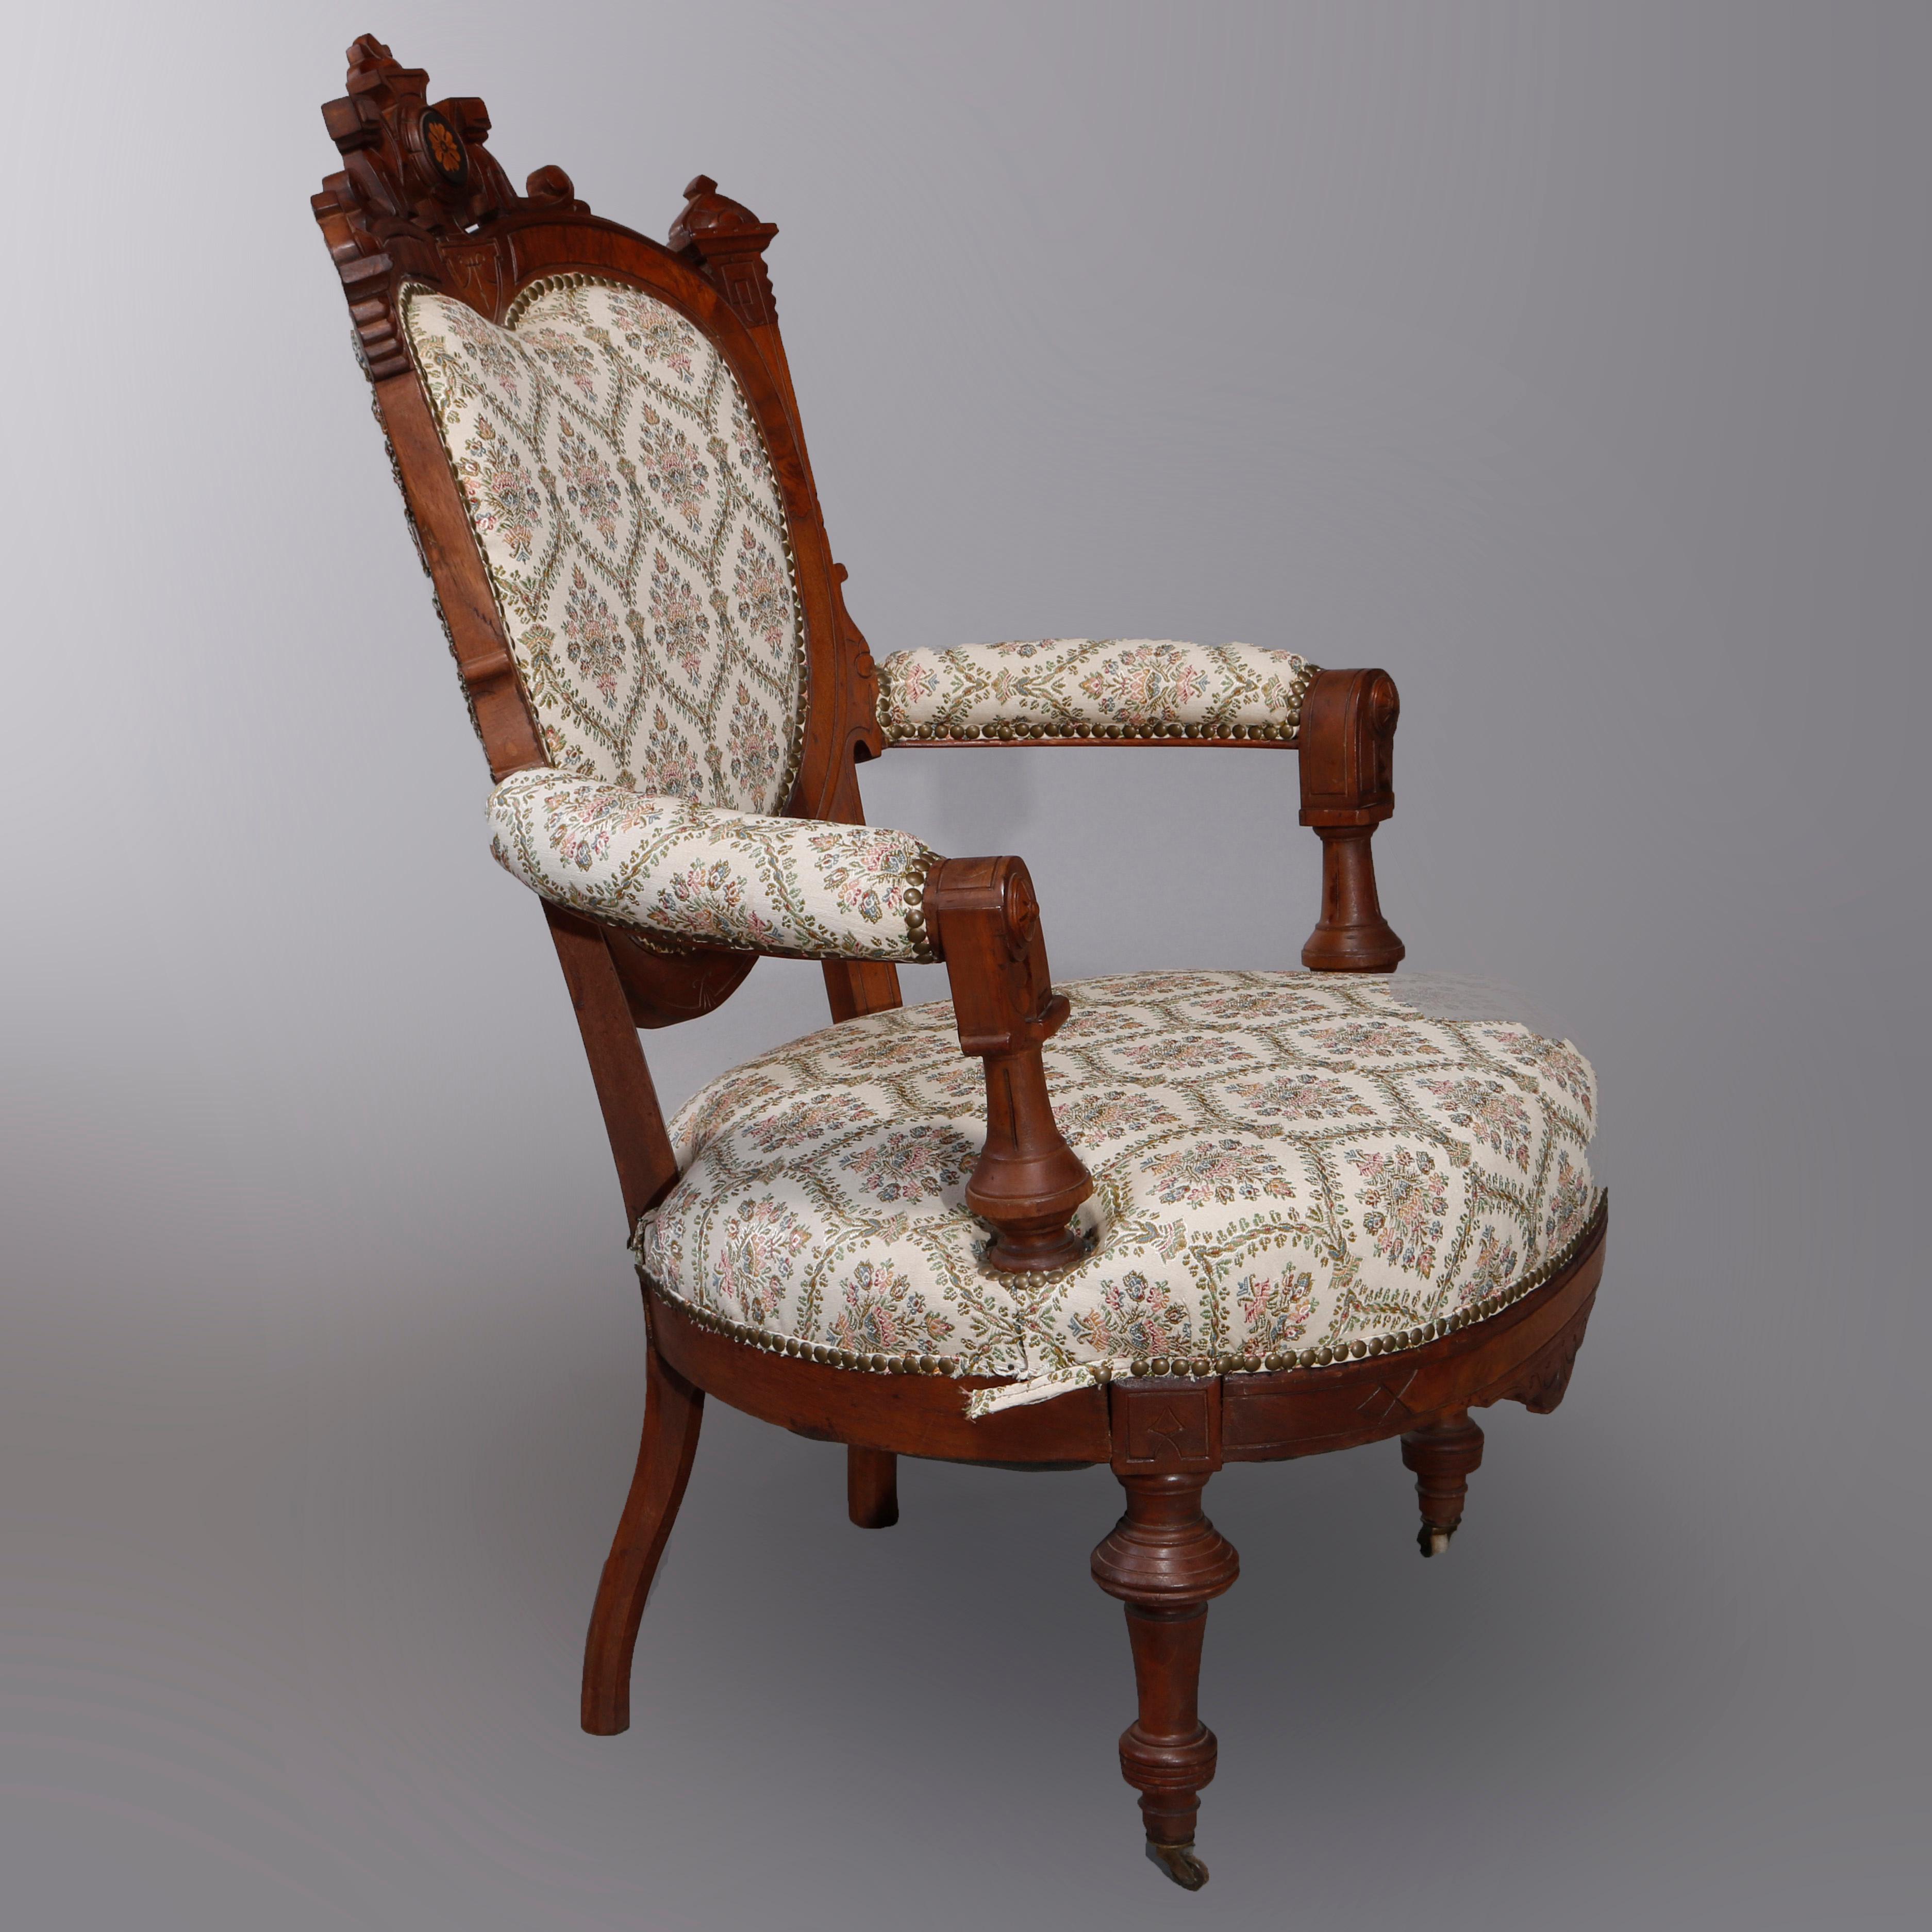 Antique Renaissance Revival Walnut & Burl Parlor Armchairs with Marquetry, c1880 For Sale 6